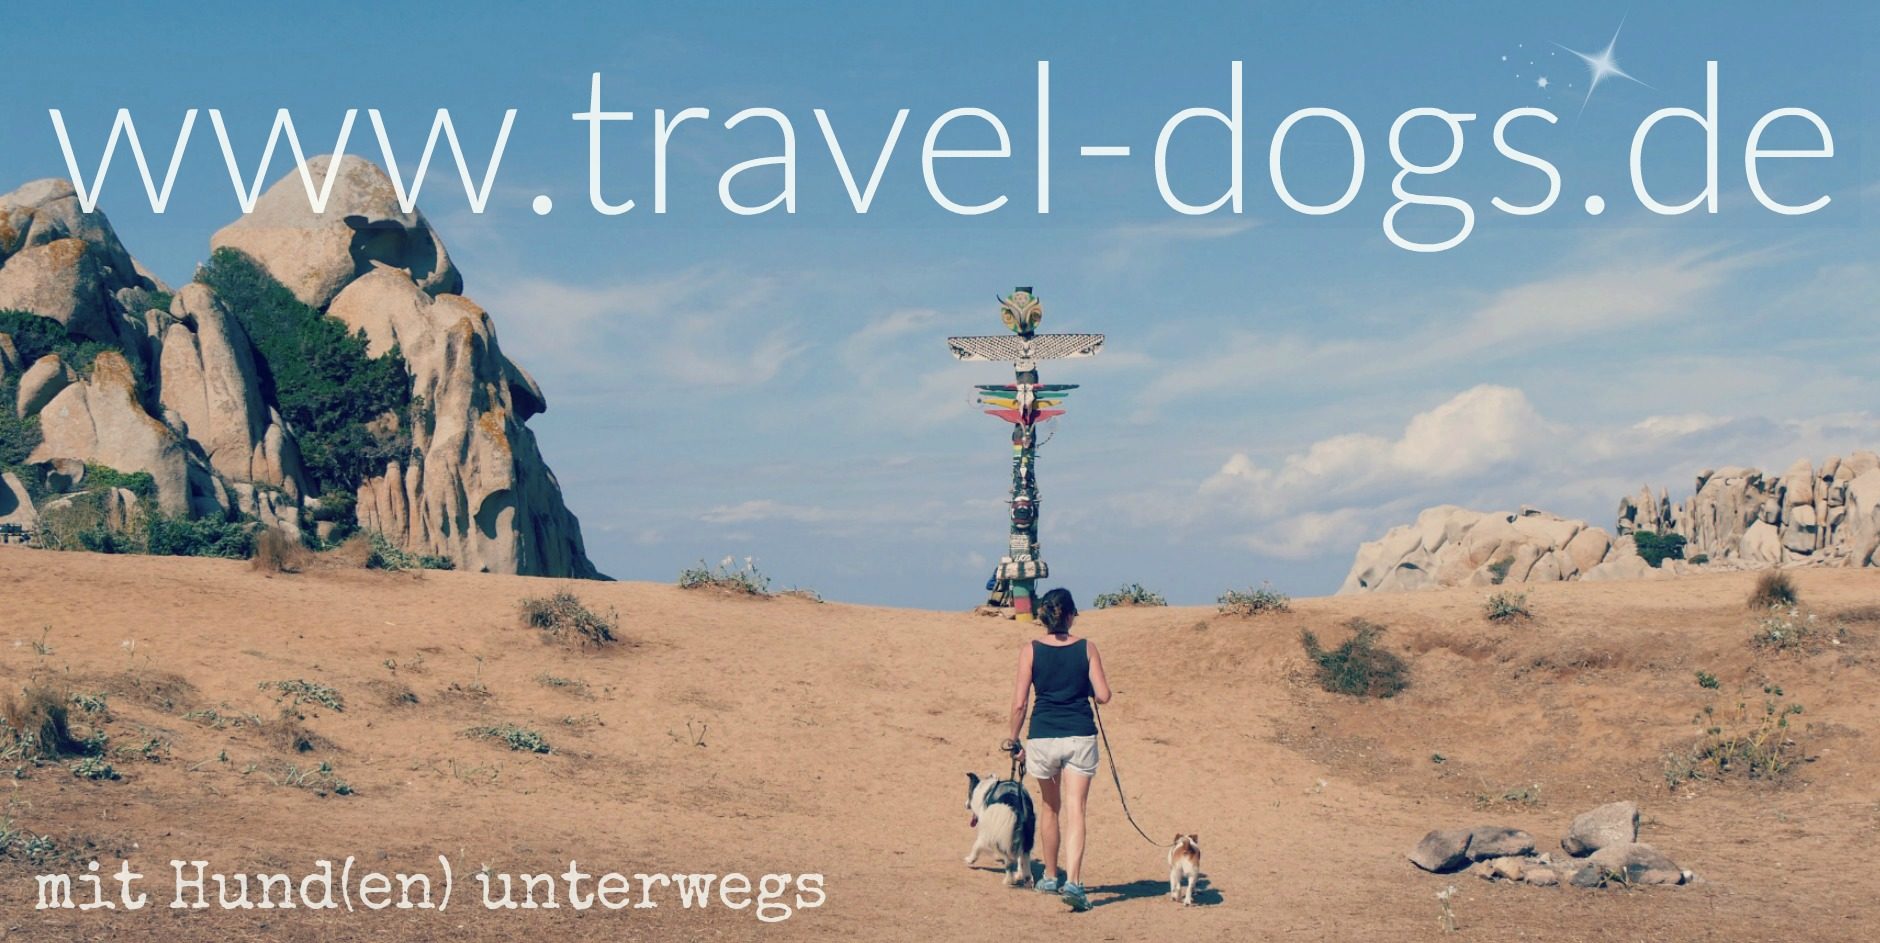 travel-dogs.de